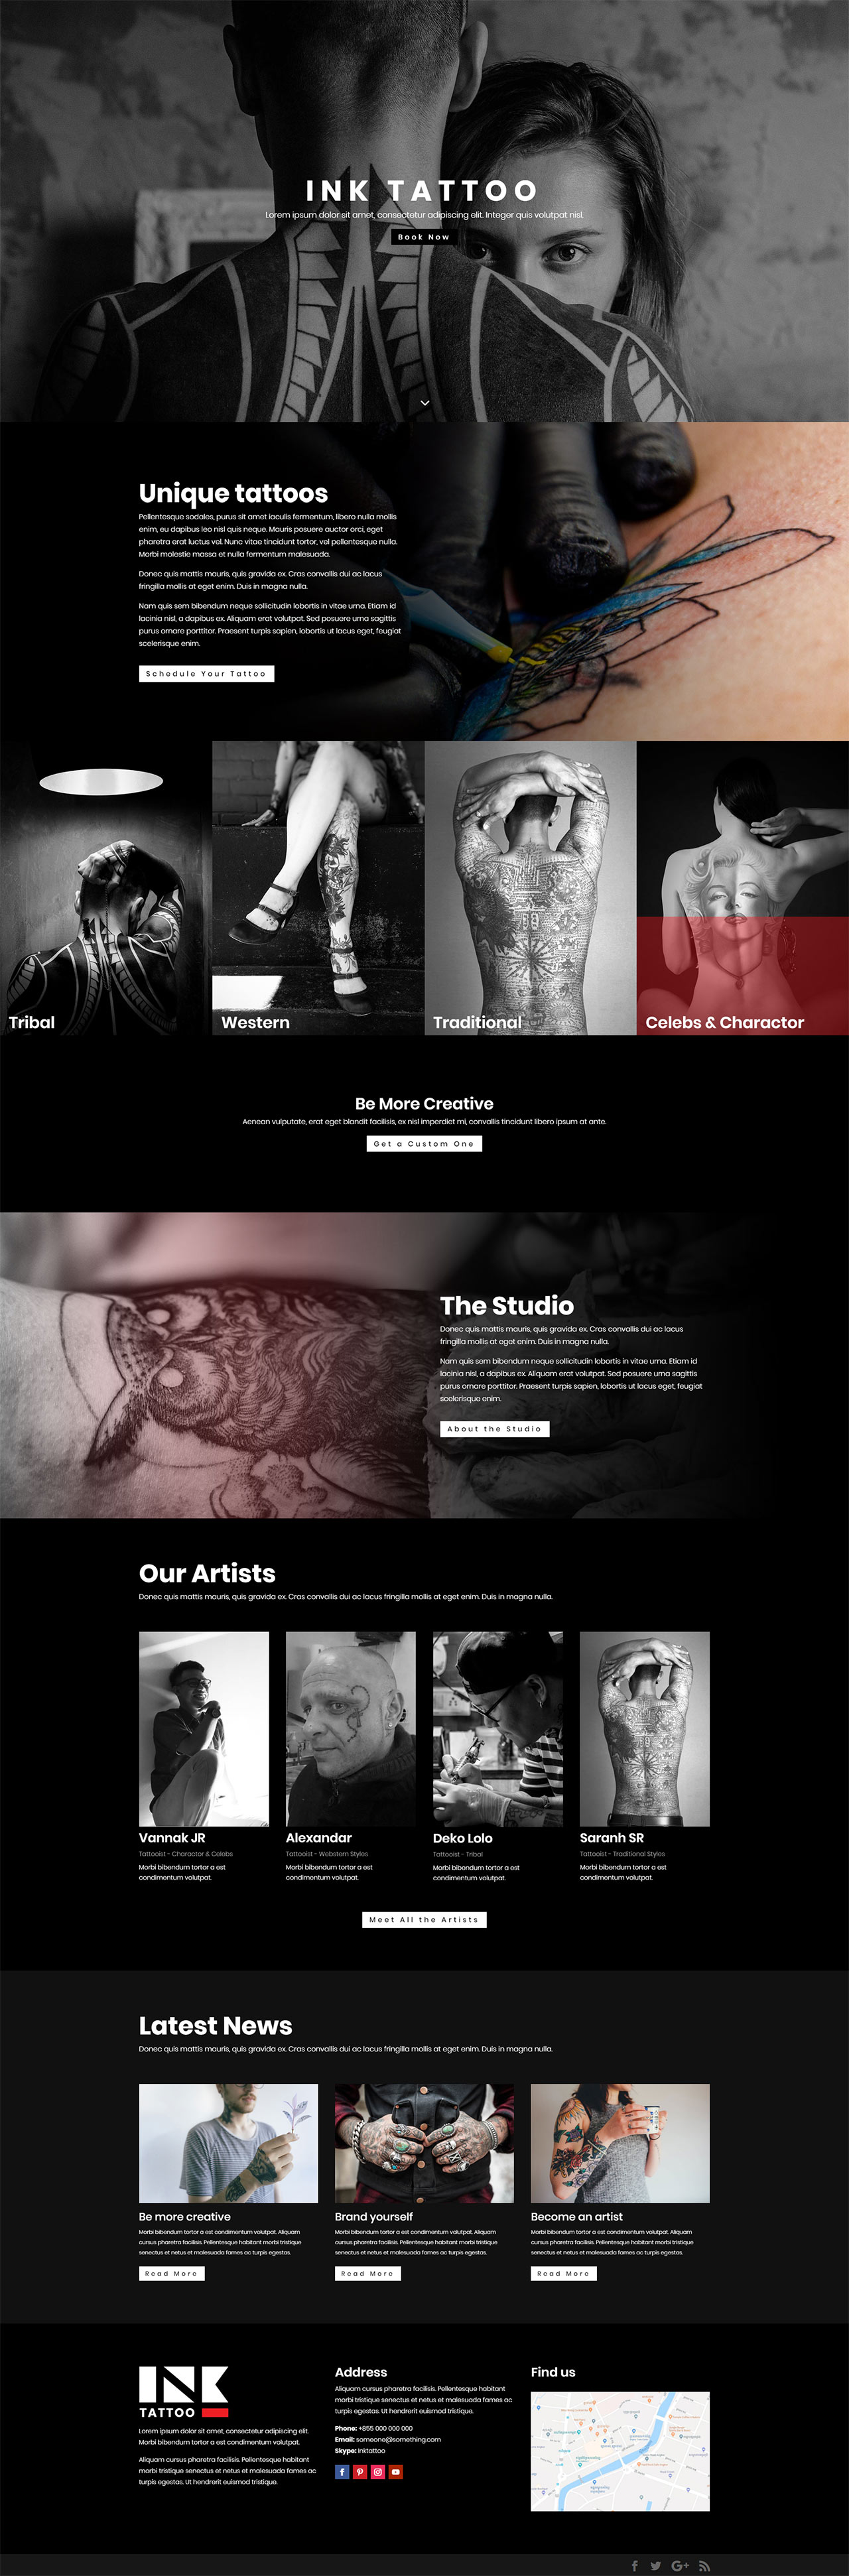 Ink Tattoo Home Page Screenshot